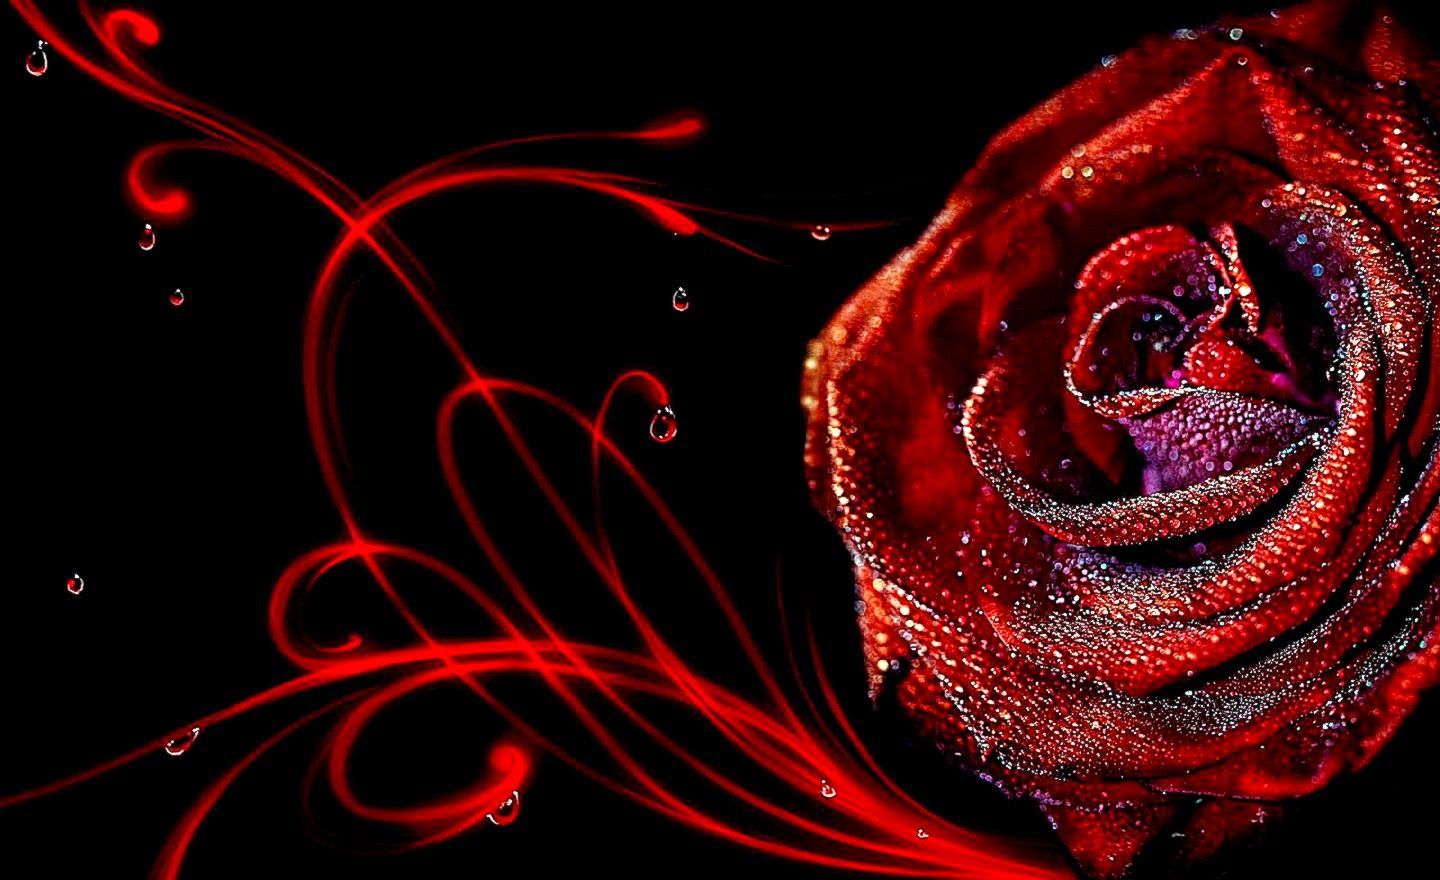 3D Rose Flower Wallpaper. Wallpaper Background Gallery